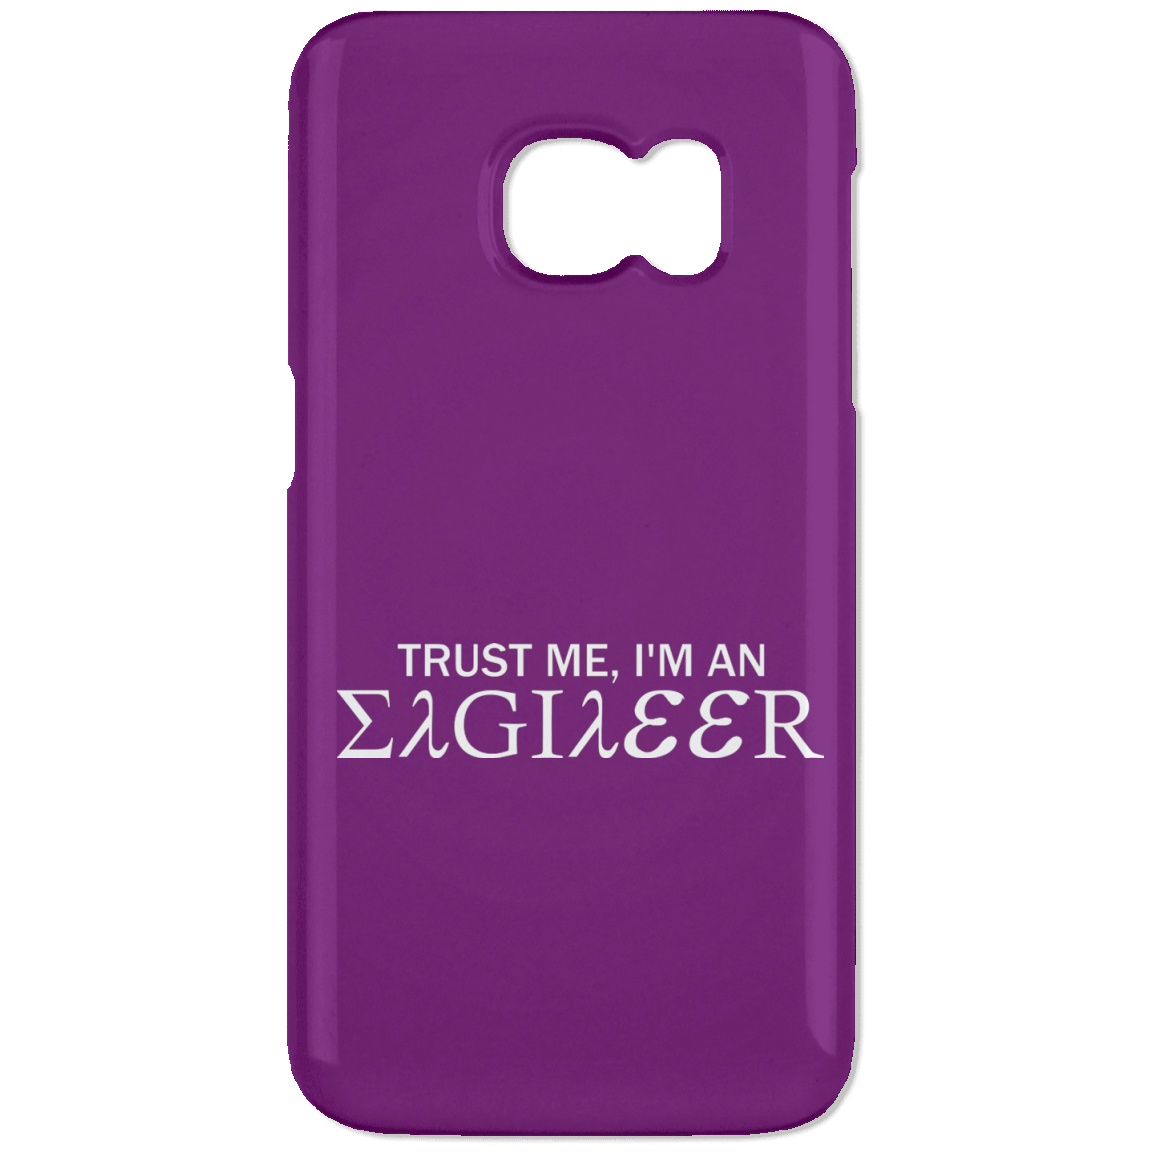 Trust Me, I'm An Engineer - Symbols (Phone Case)